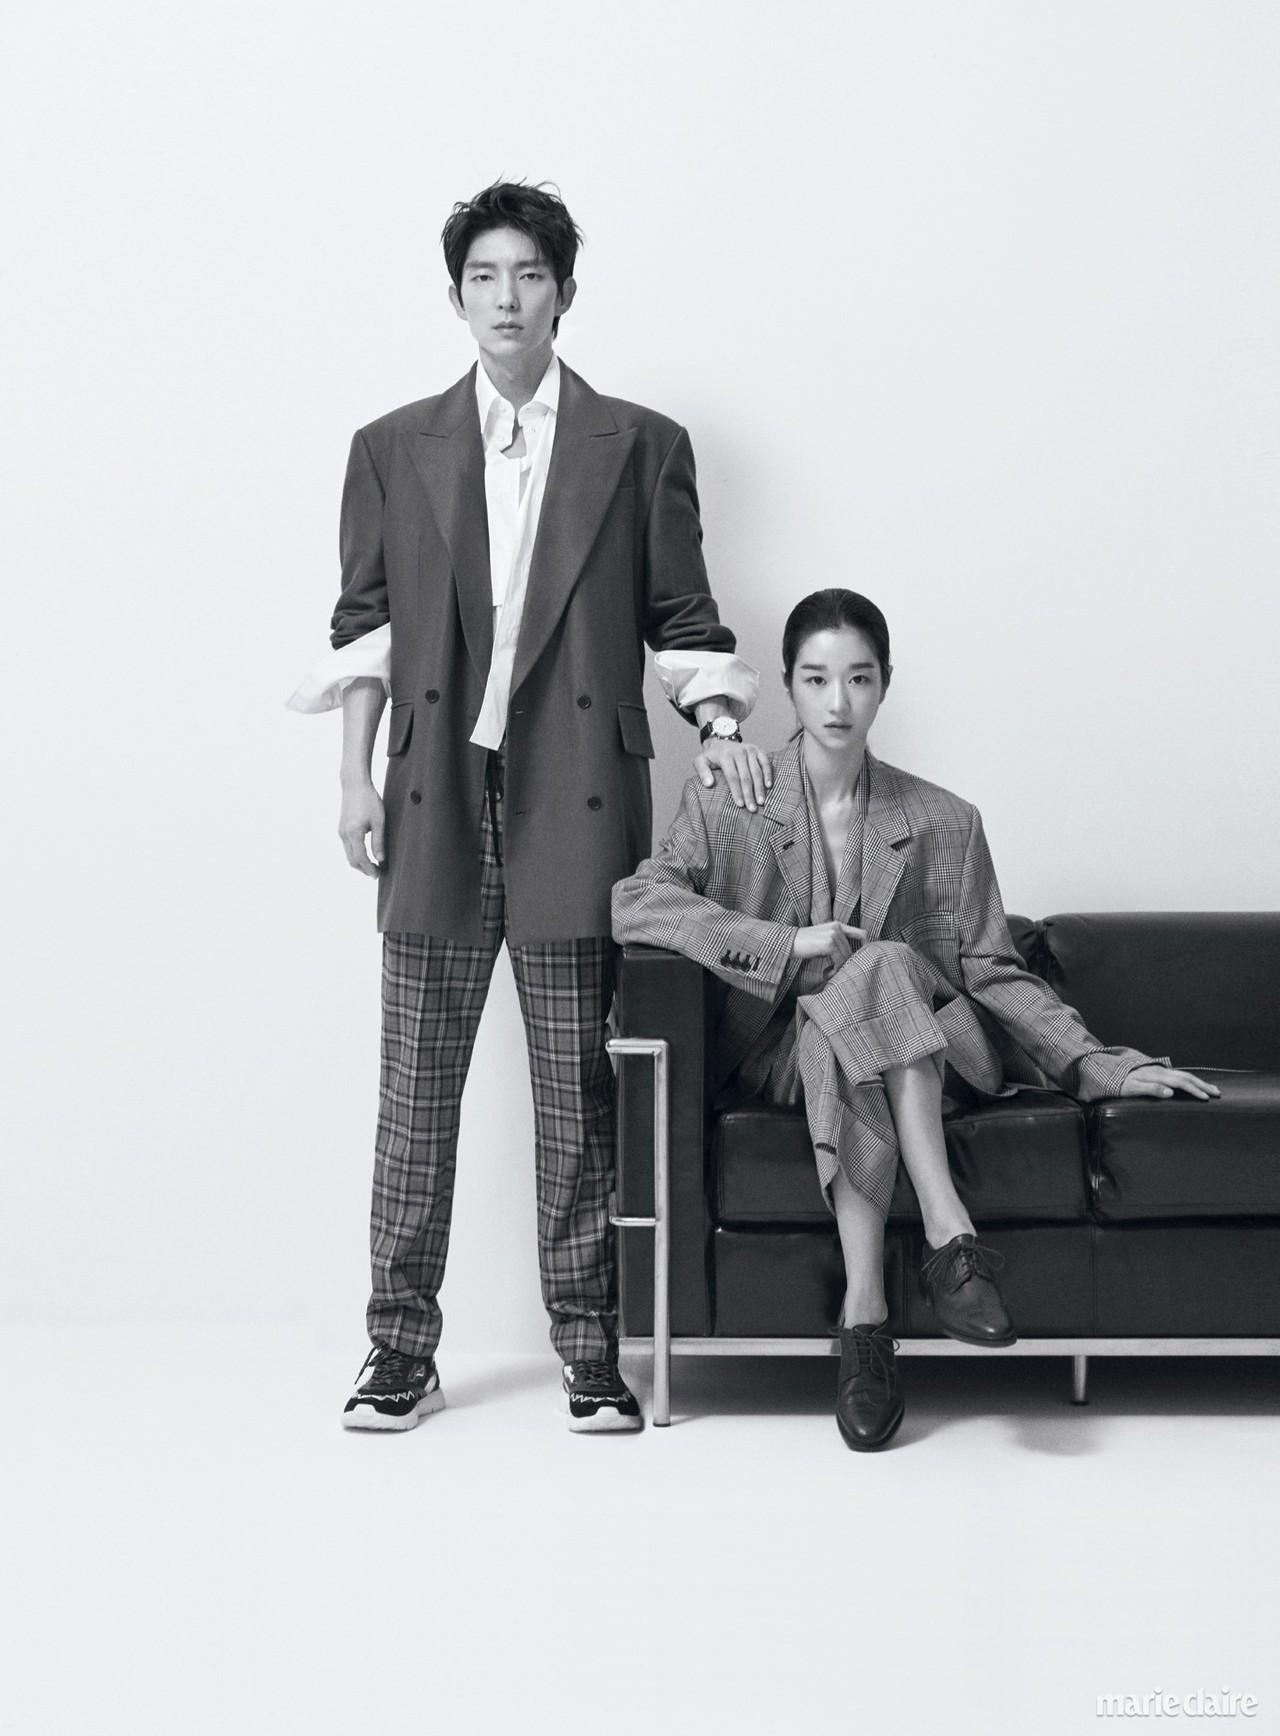 Korean Actors and Actresses image Seo Ye Ji and Lee Joon Gi.